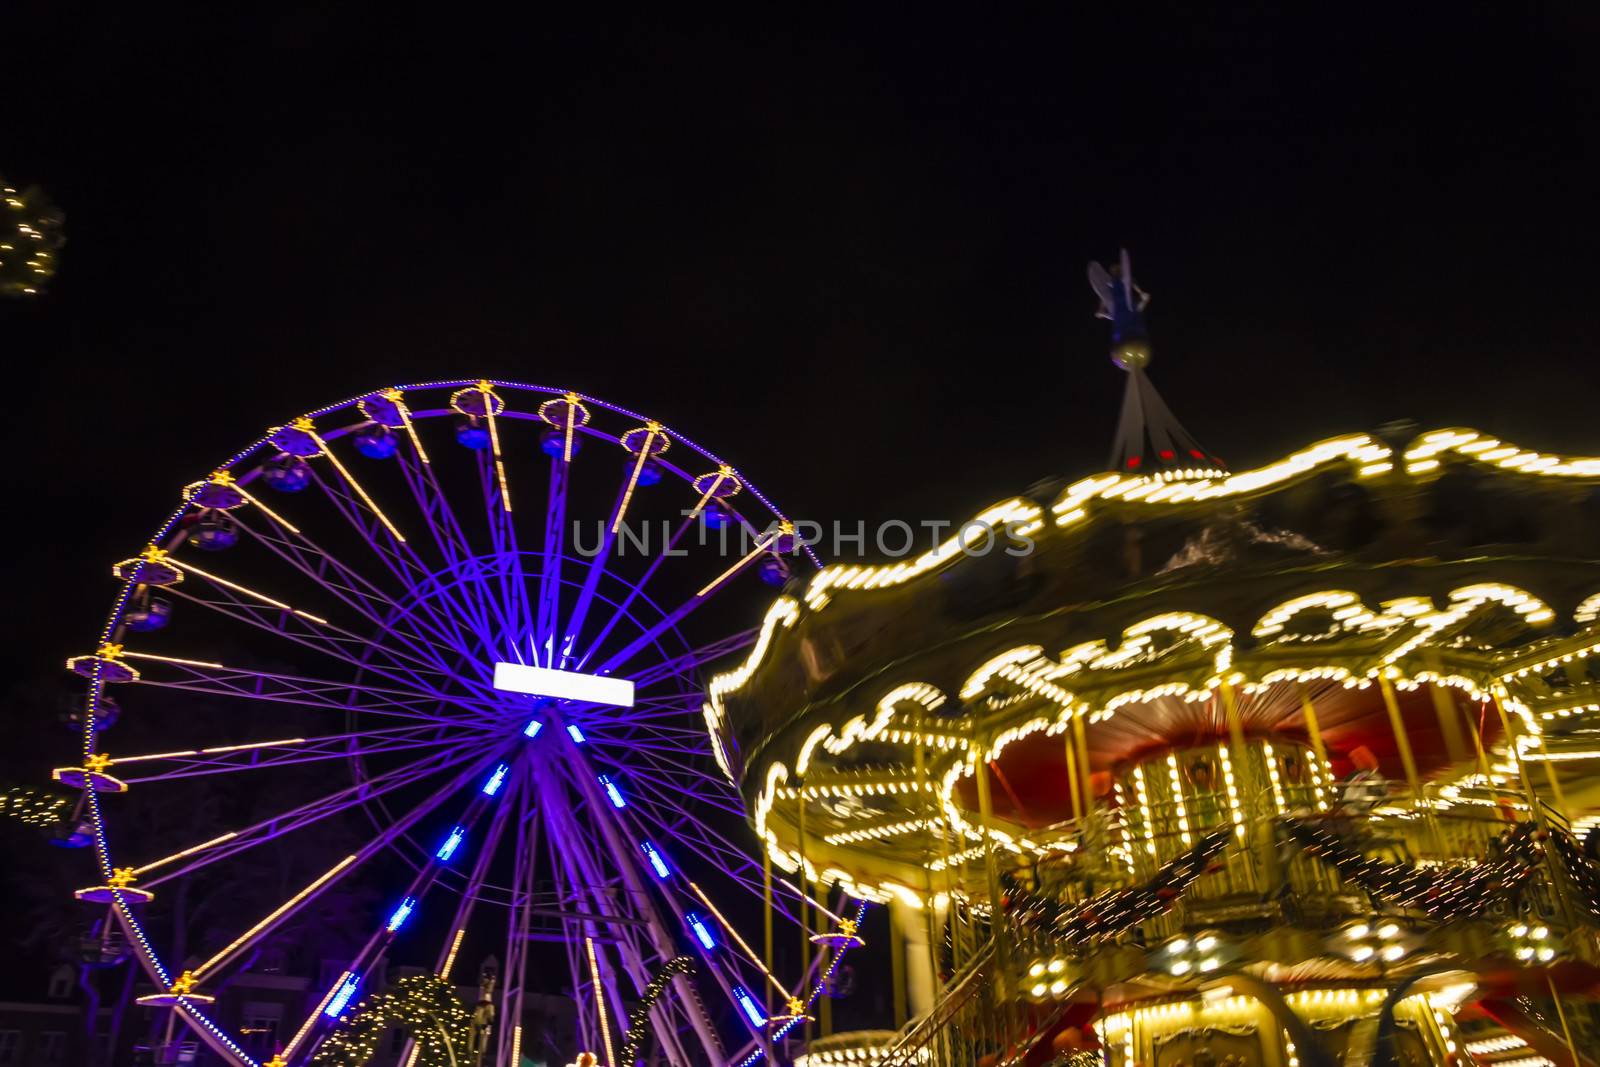 Turning Ferris wheel on achristmas market, Maastricht, the Nethe by Tetyana